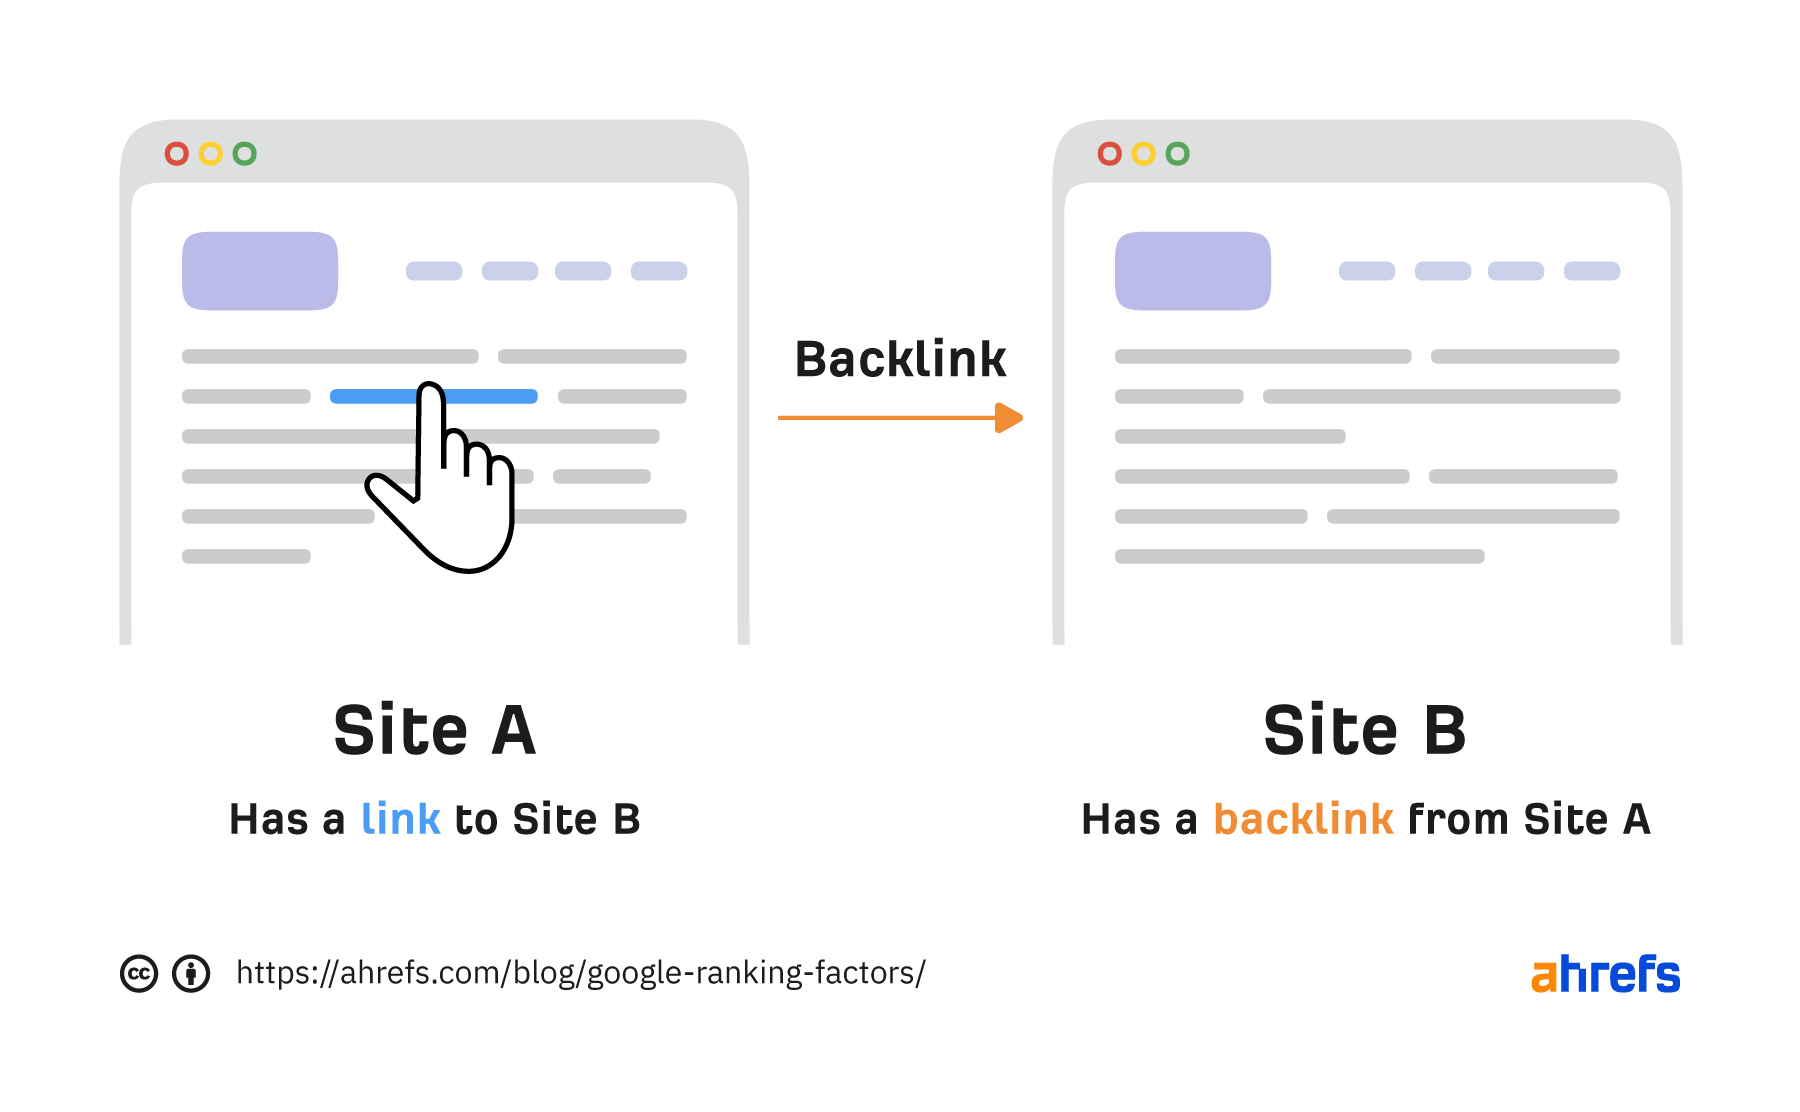 How a backlink works
